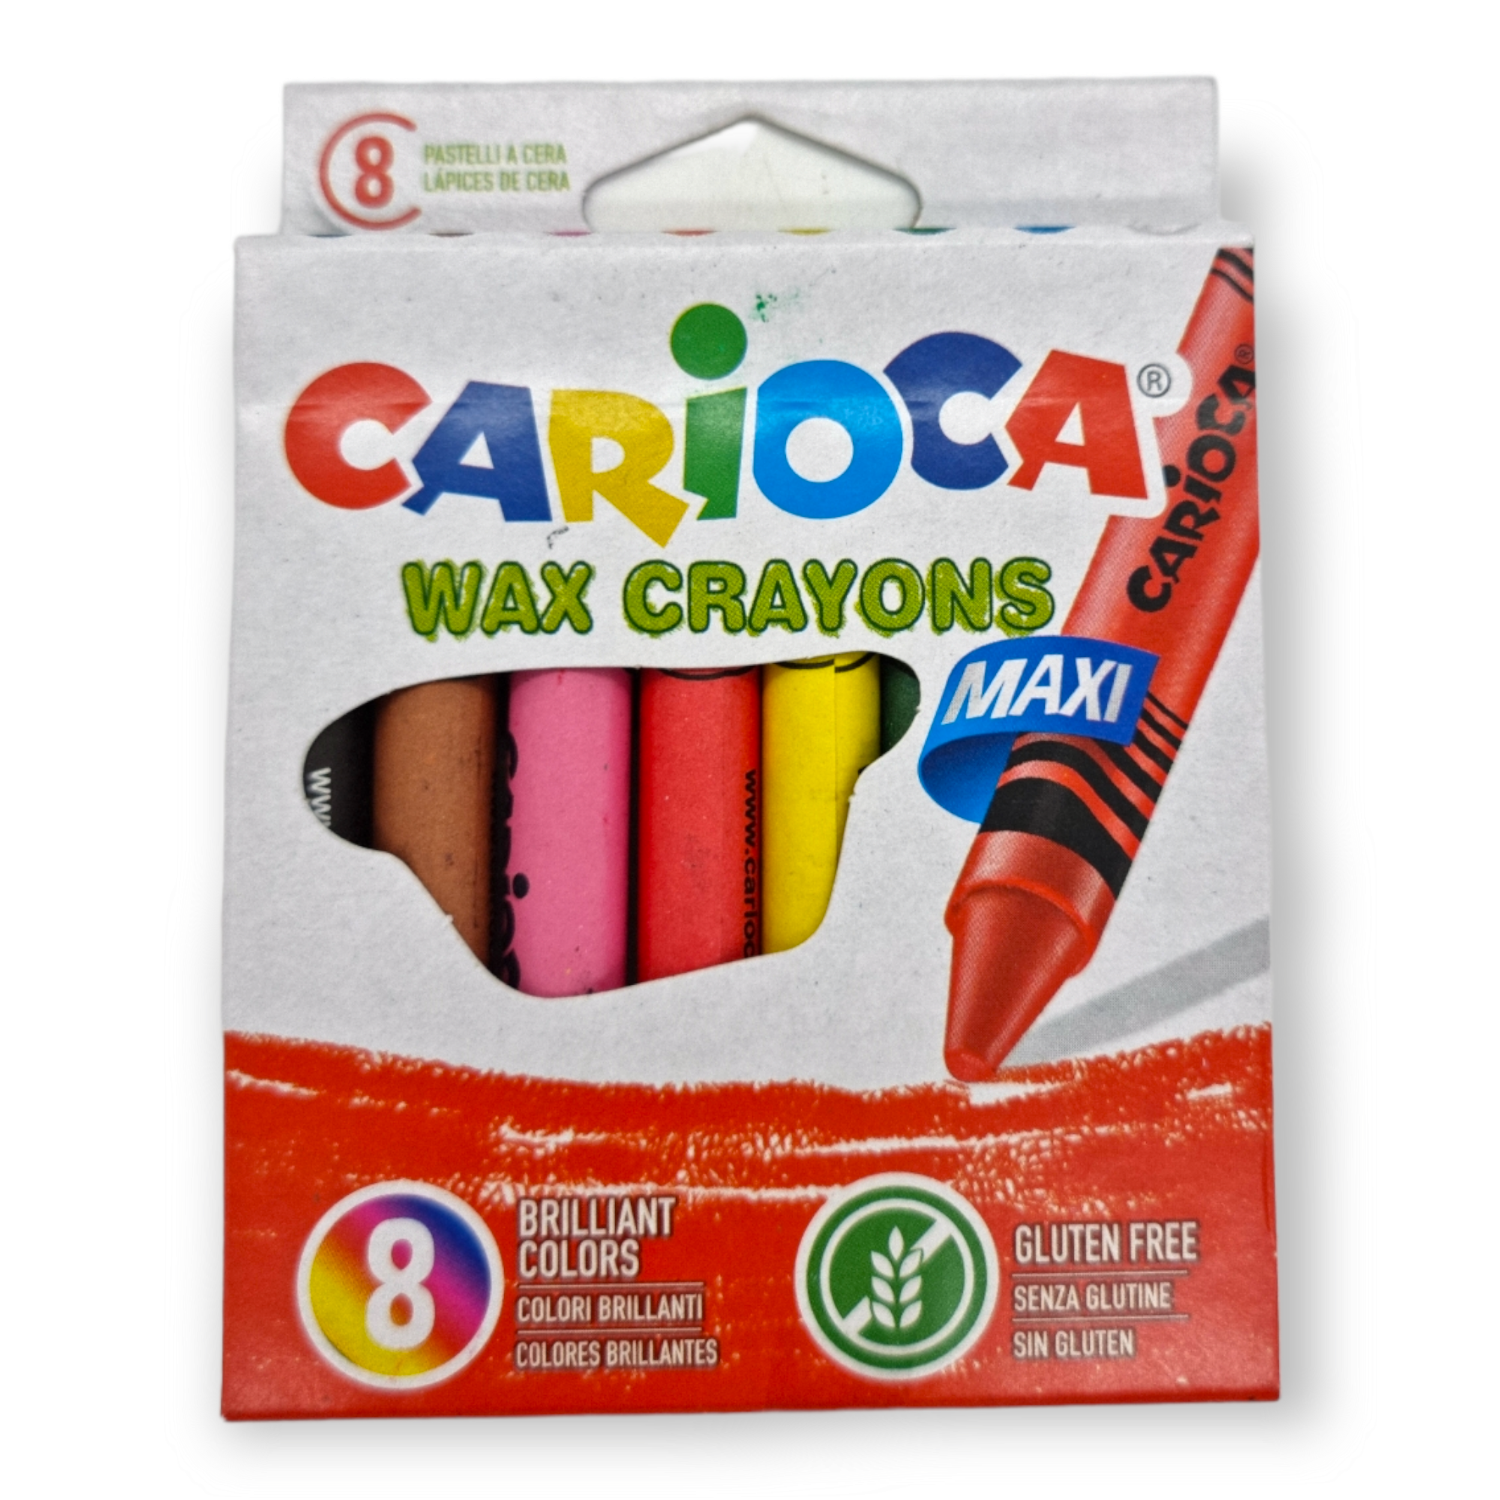 Carioca Maxi Wax Crayons 8pk